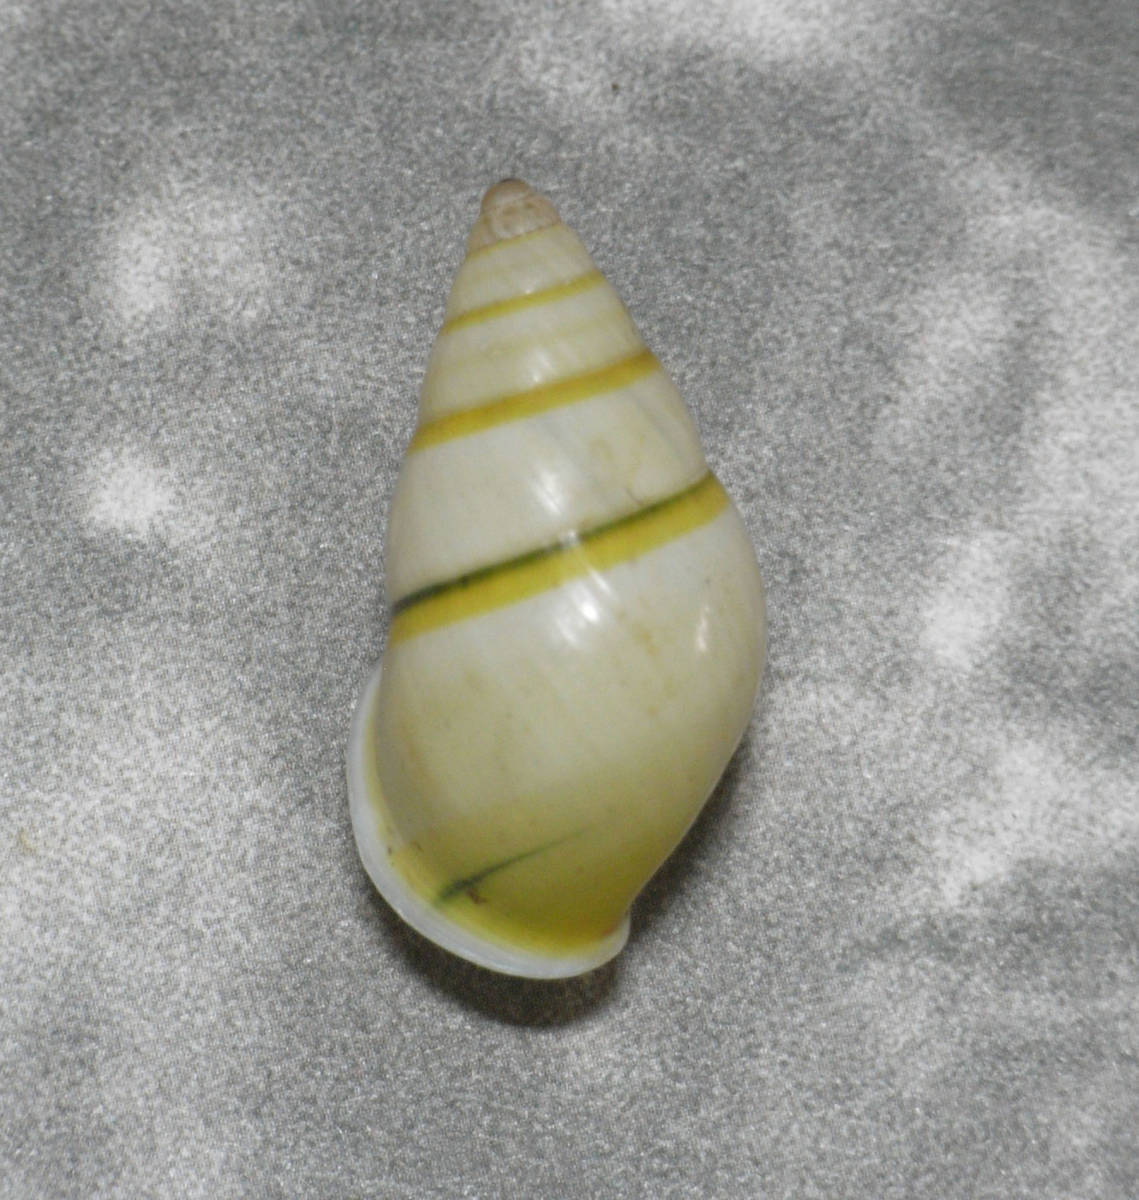  раковина моллюска     образец  Amphidromus daklakensis 28.8mm